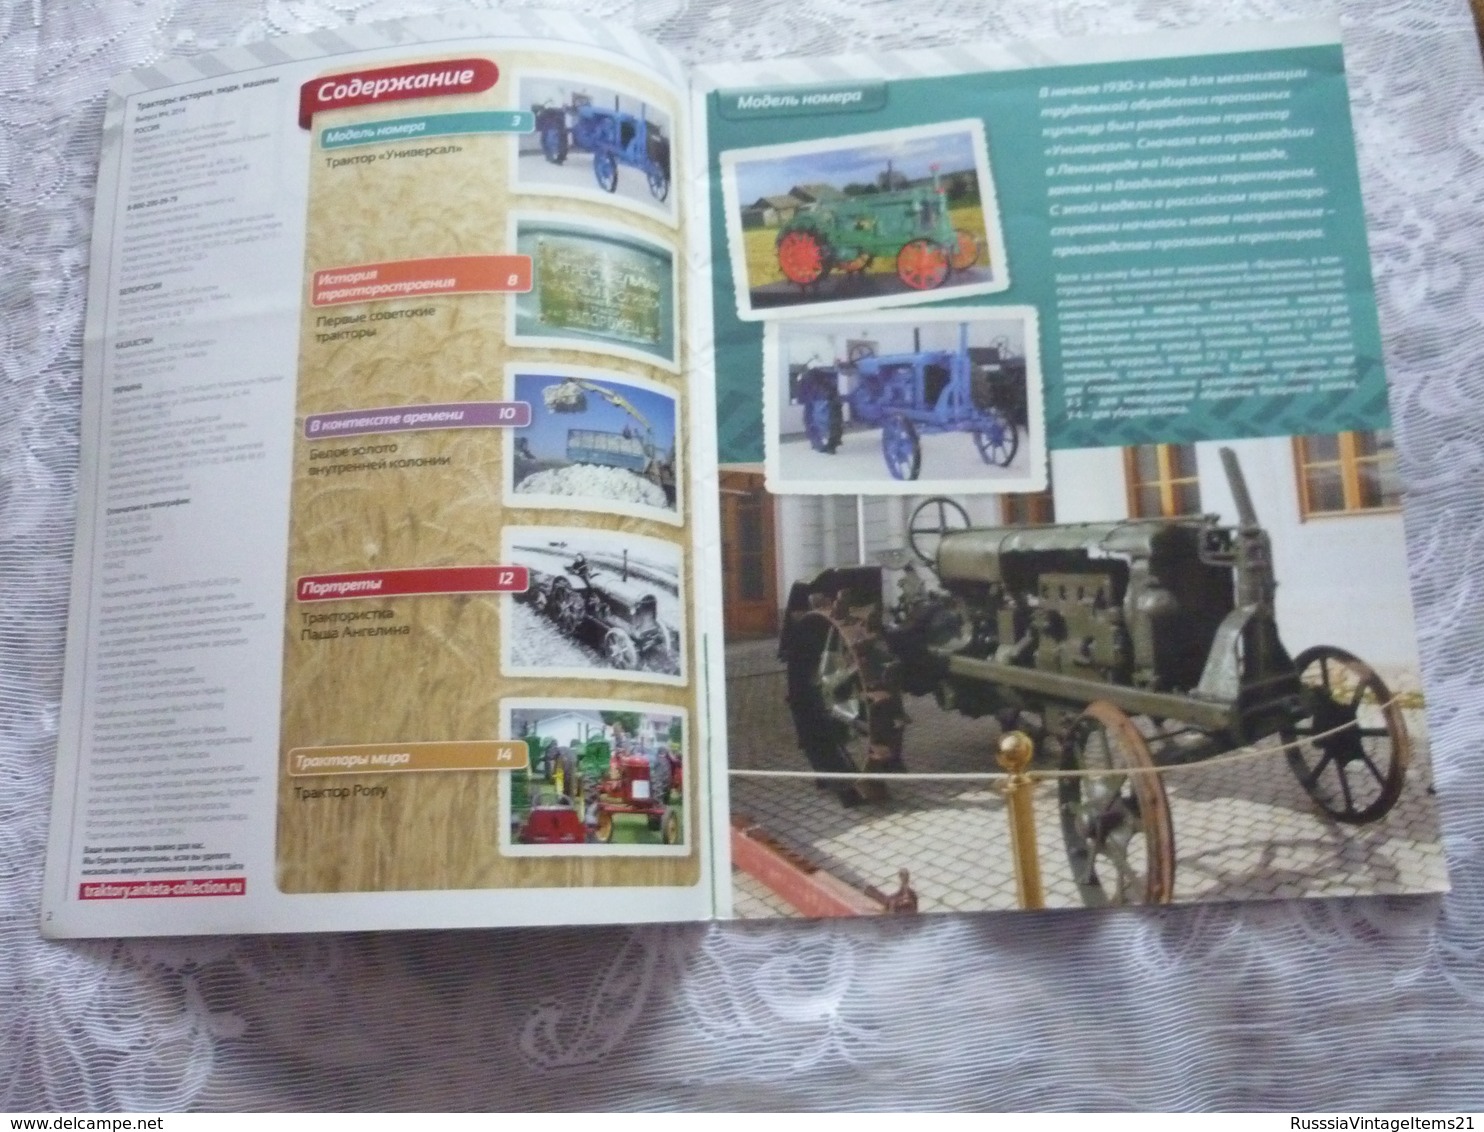 Soviet and Russian tractors - in Russian - Journal Tractors № 1, 2, 3, 4, 6, 7, 10, 11, 12, 13, 14, 15, 16, 17.